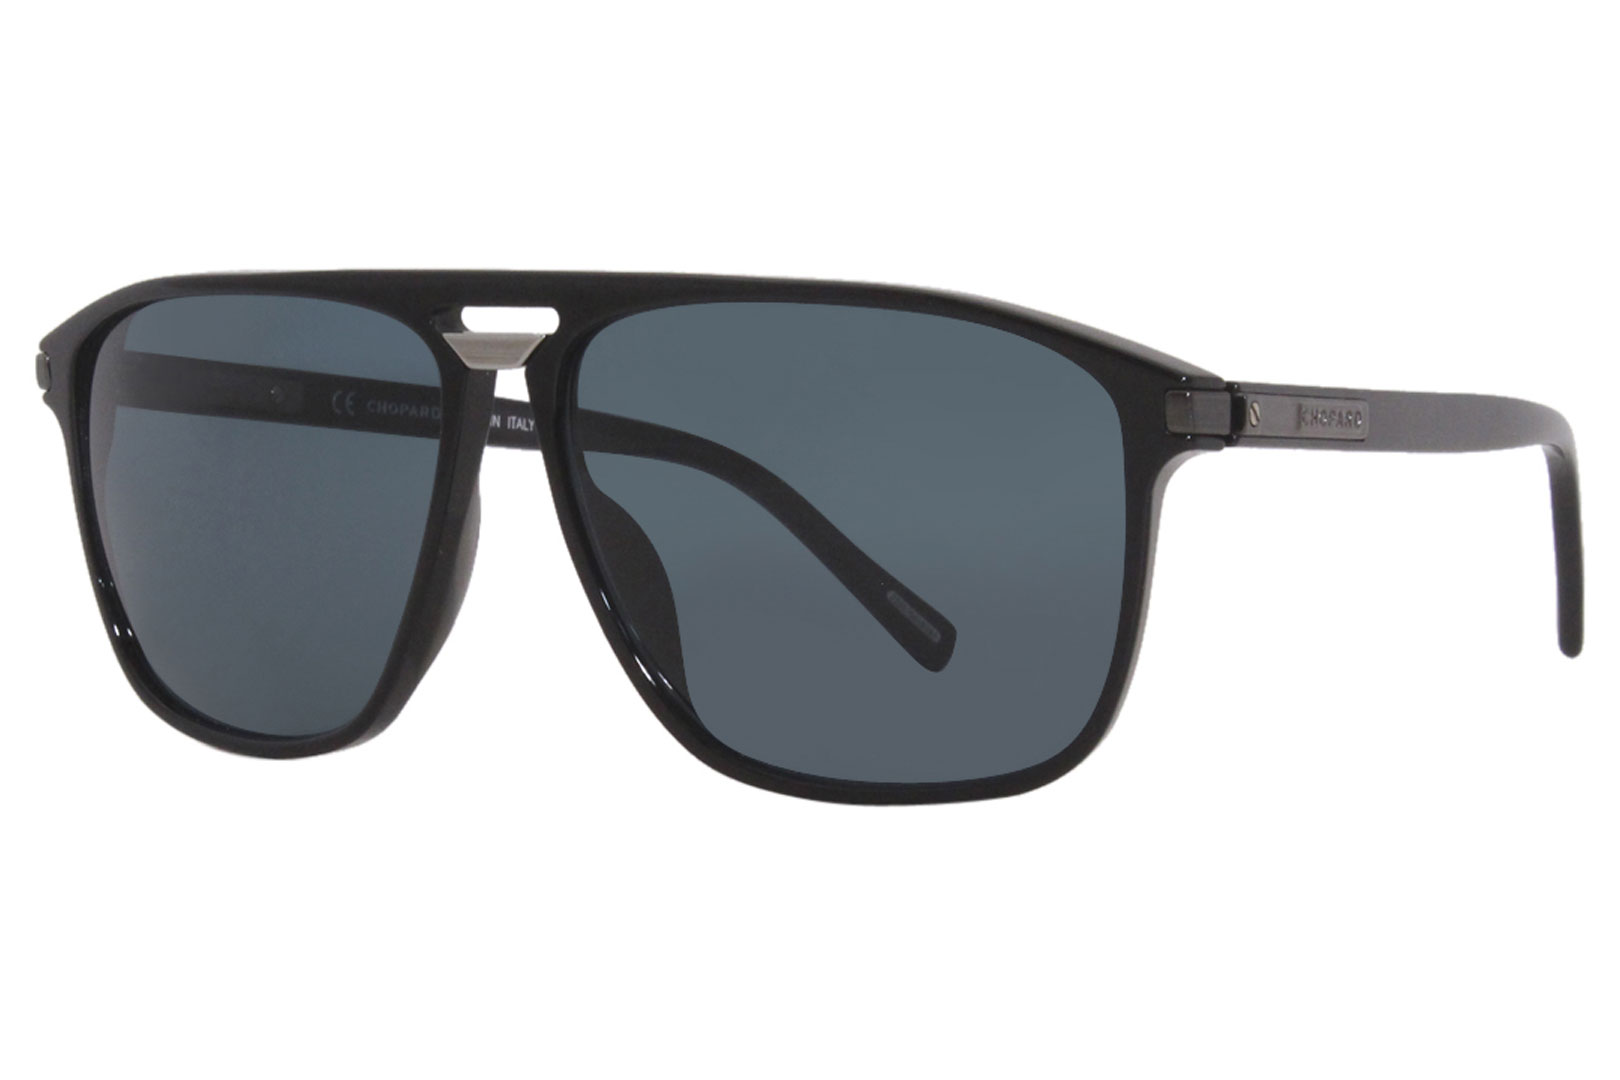 Chopard Sunglasses Men's SCH293 700K Black/Blue Lenses 61-13-145mm ...